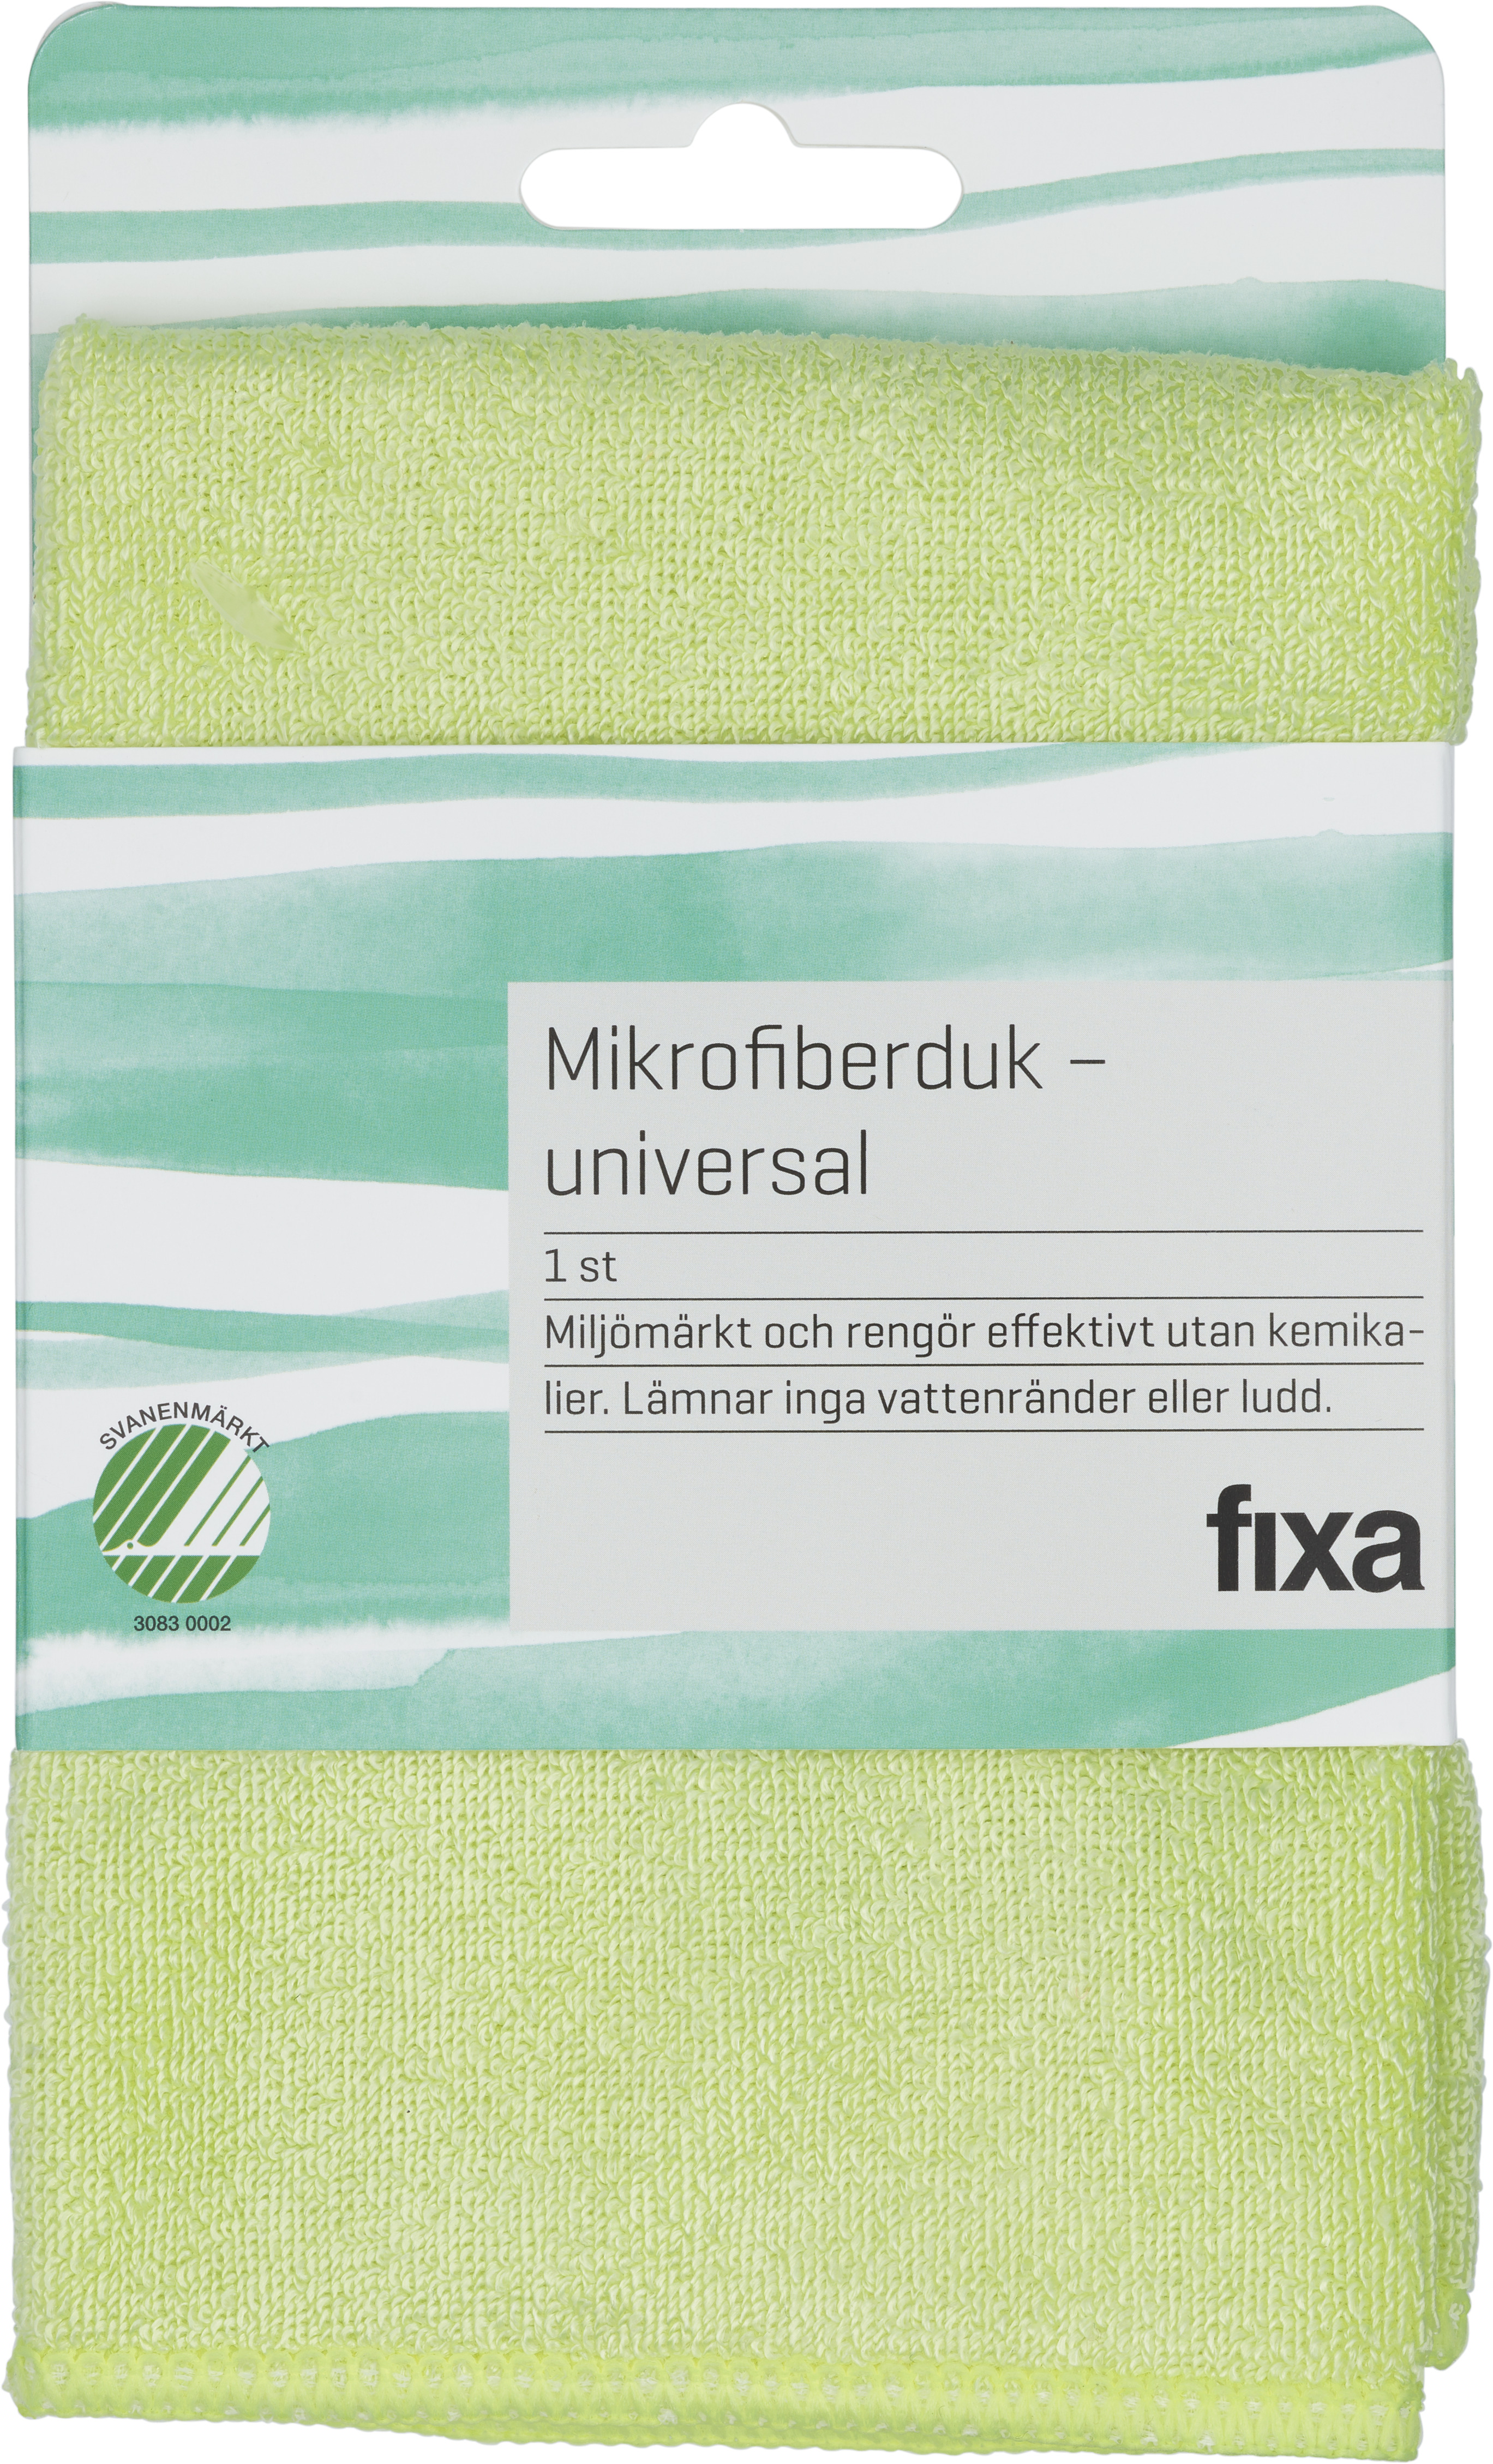 fixa Microfiberduk Universal 1 st